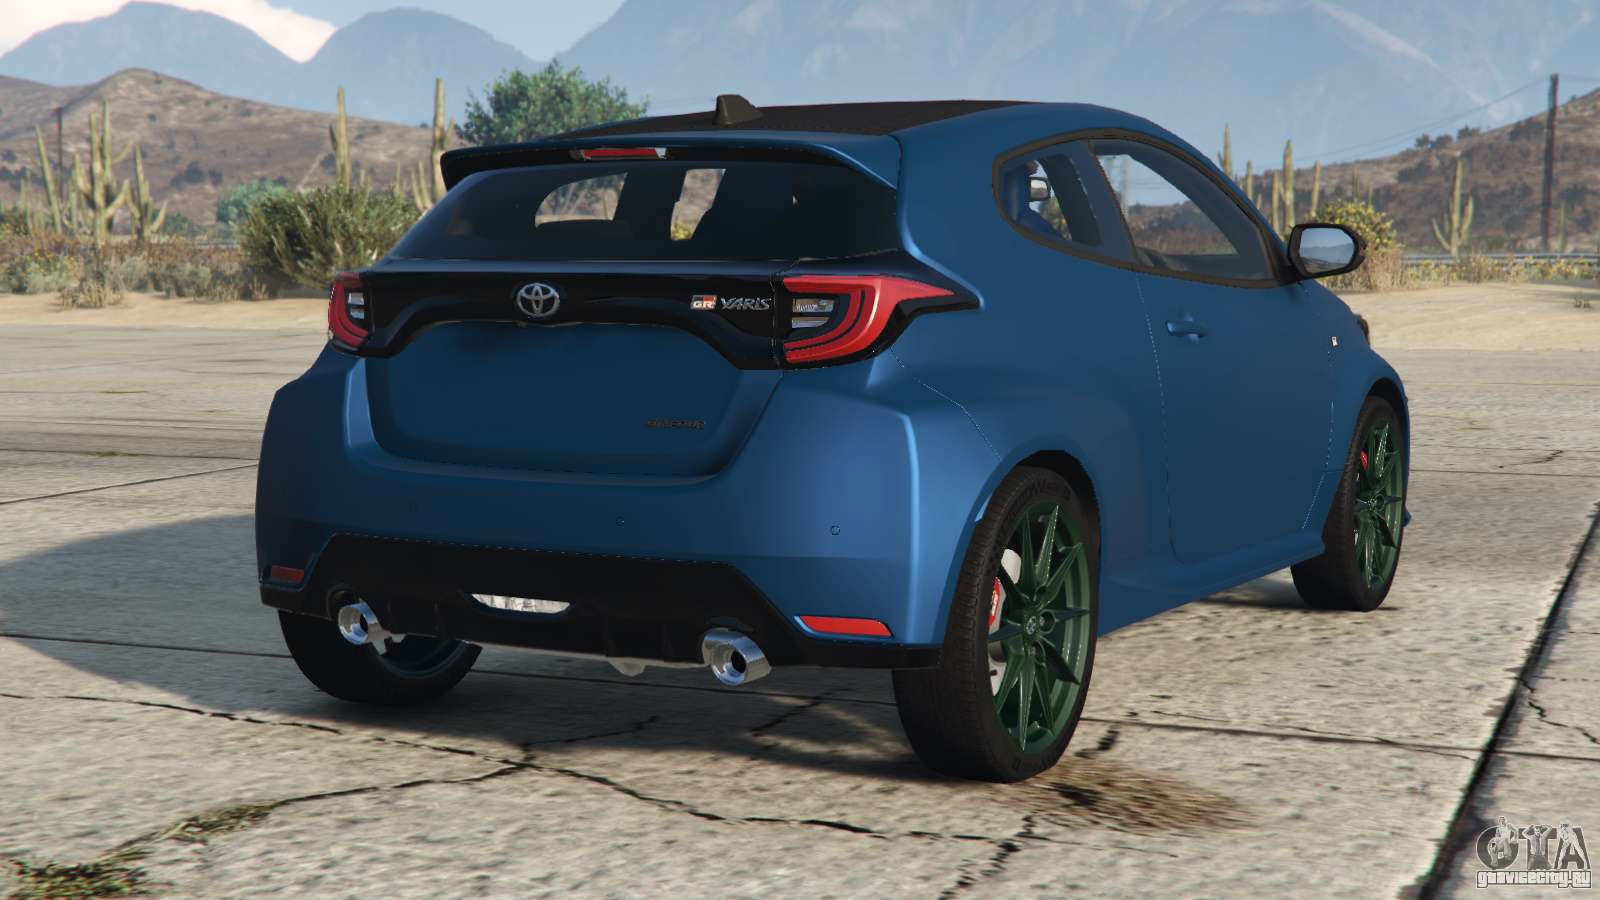 Toyota GR Yaris (XP210) Hippie Blue for GTA 5